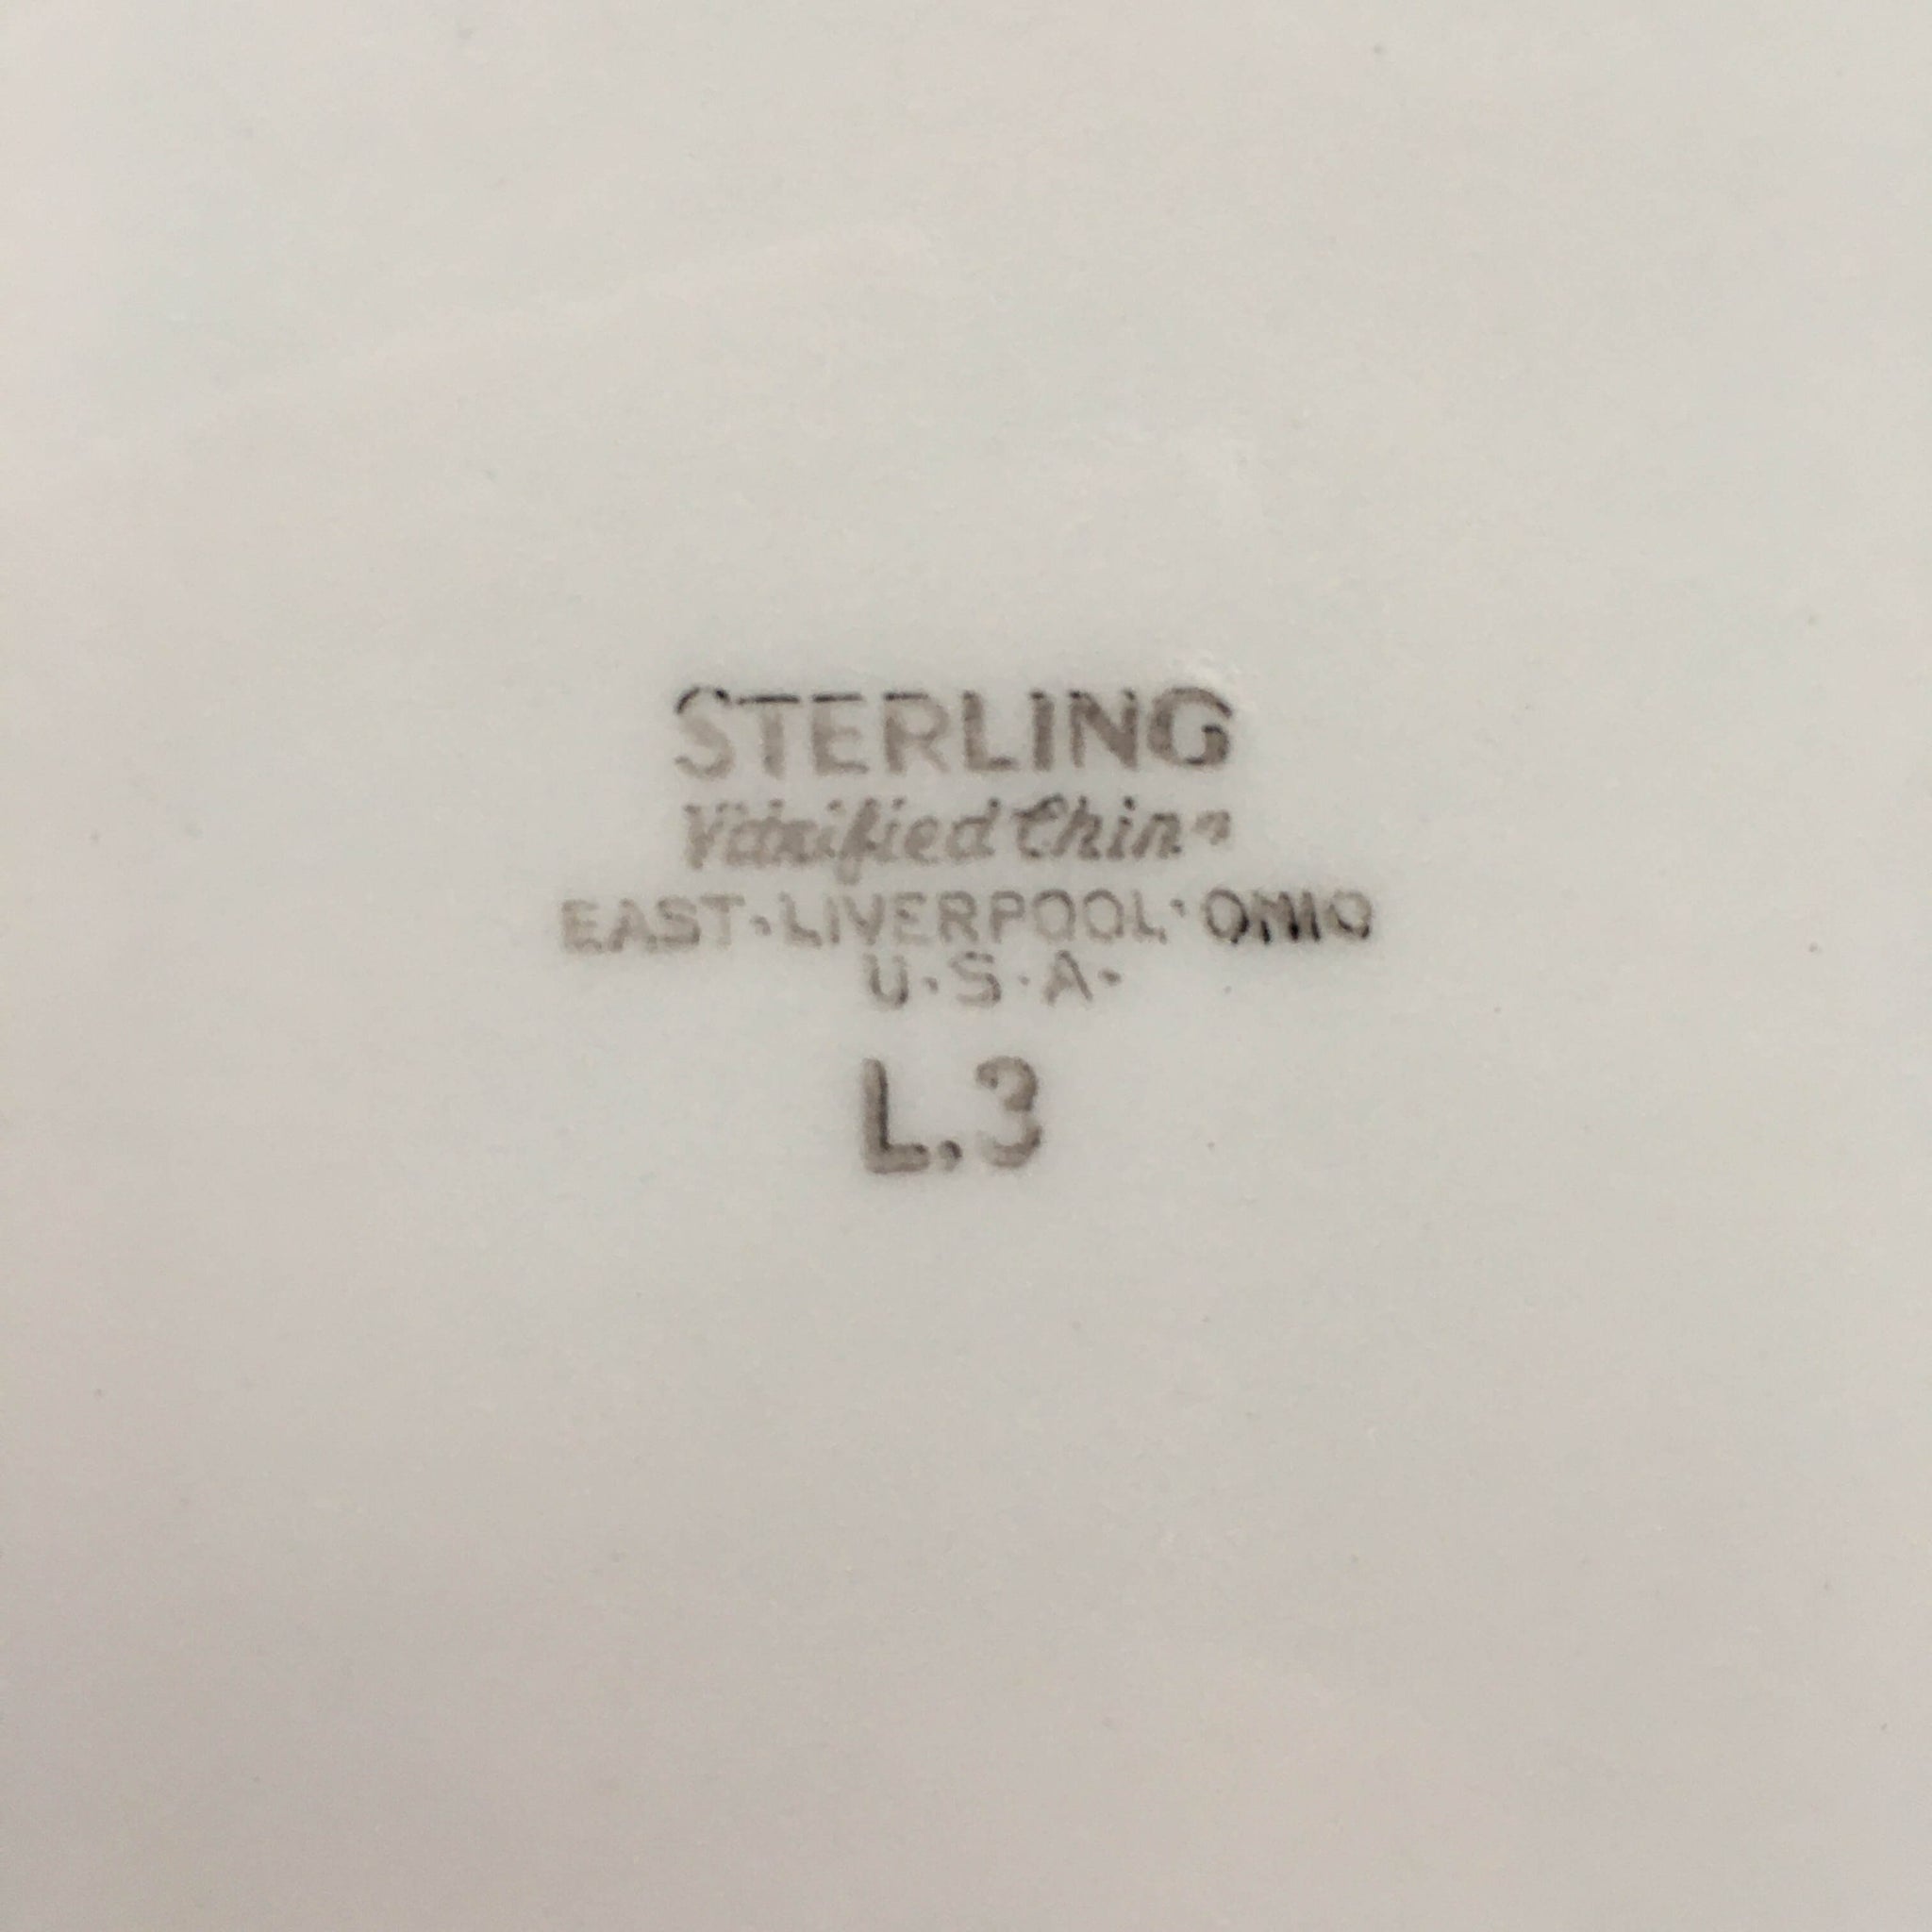 Vintage Sterling China Restaurantware White Platter - L3 Vitrified China Hotelware circa 1975